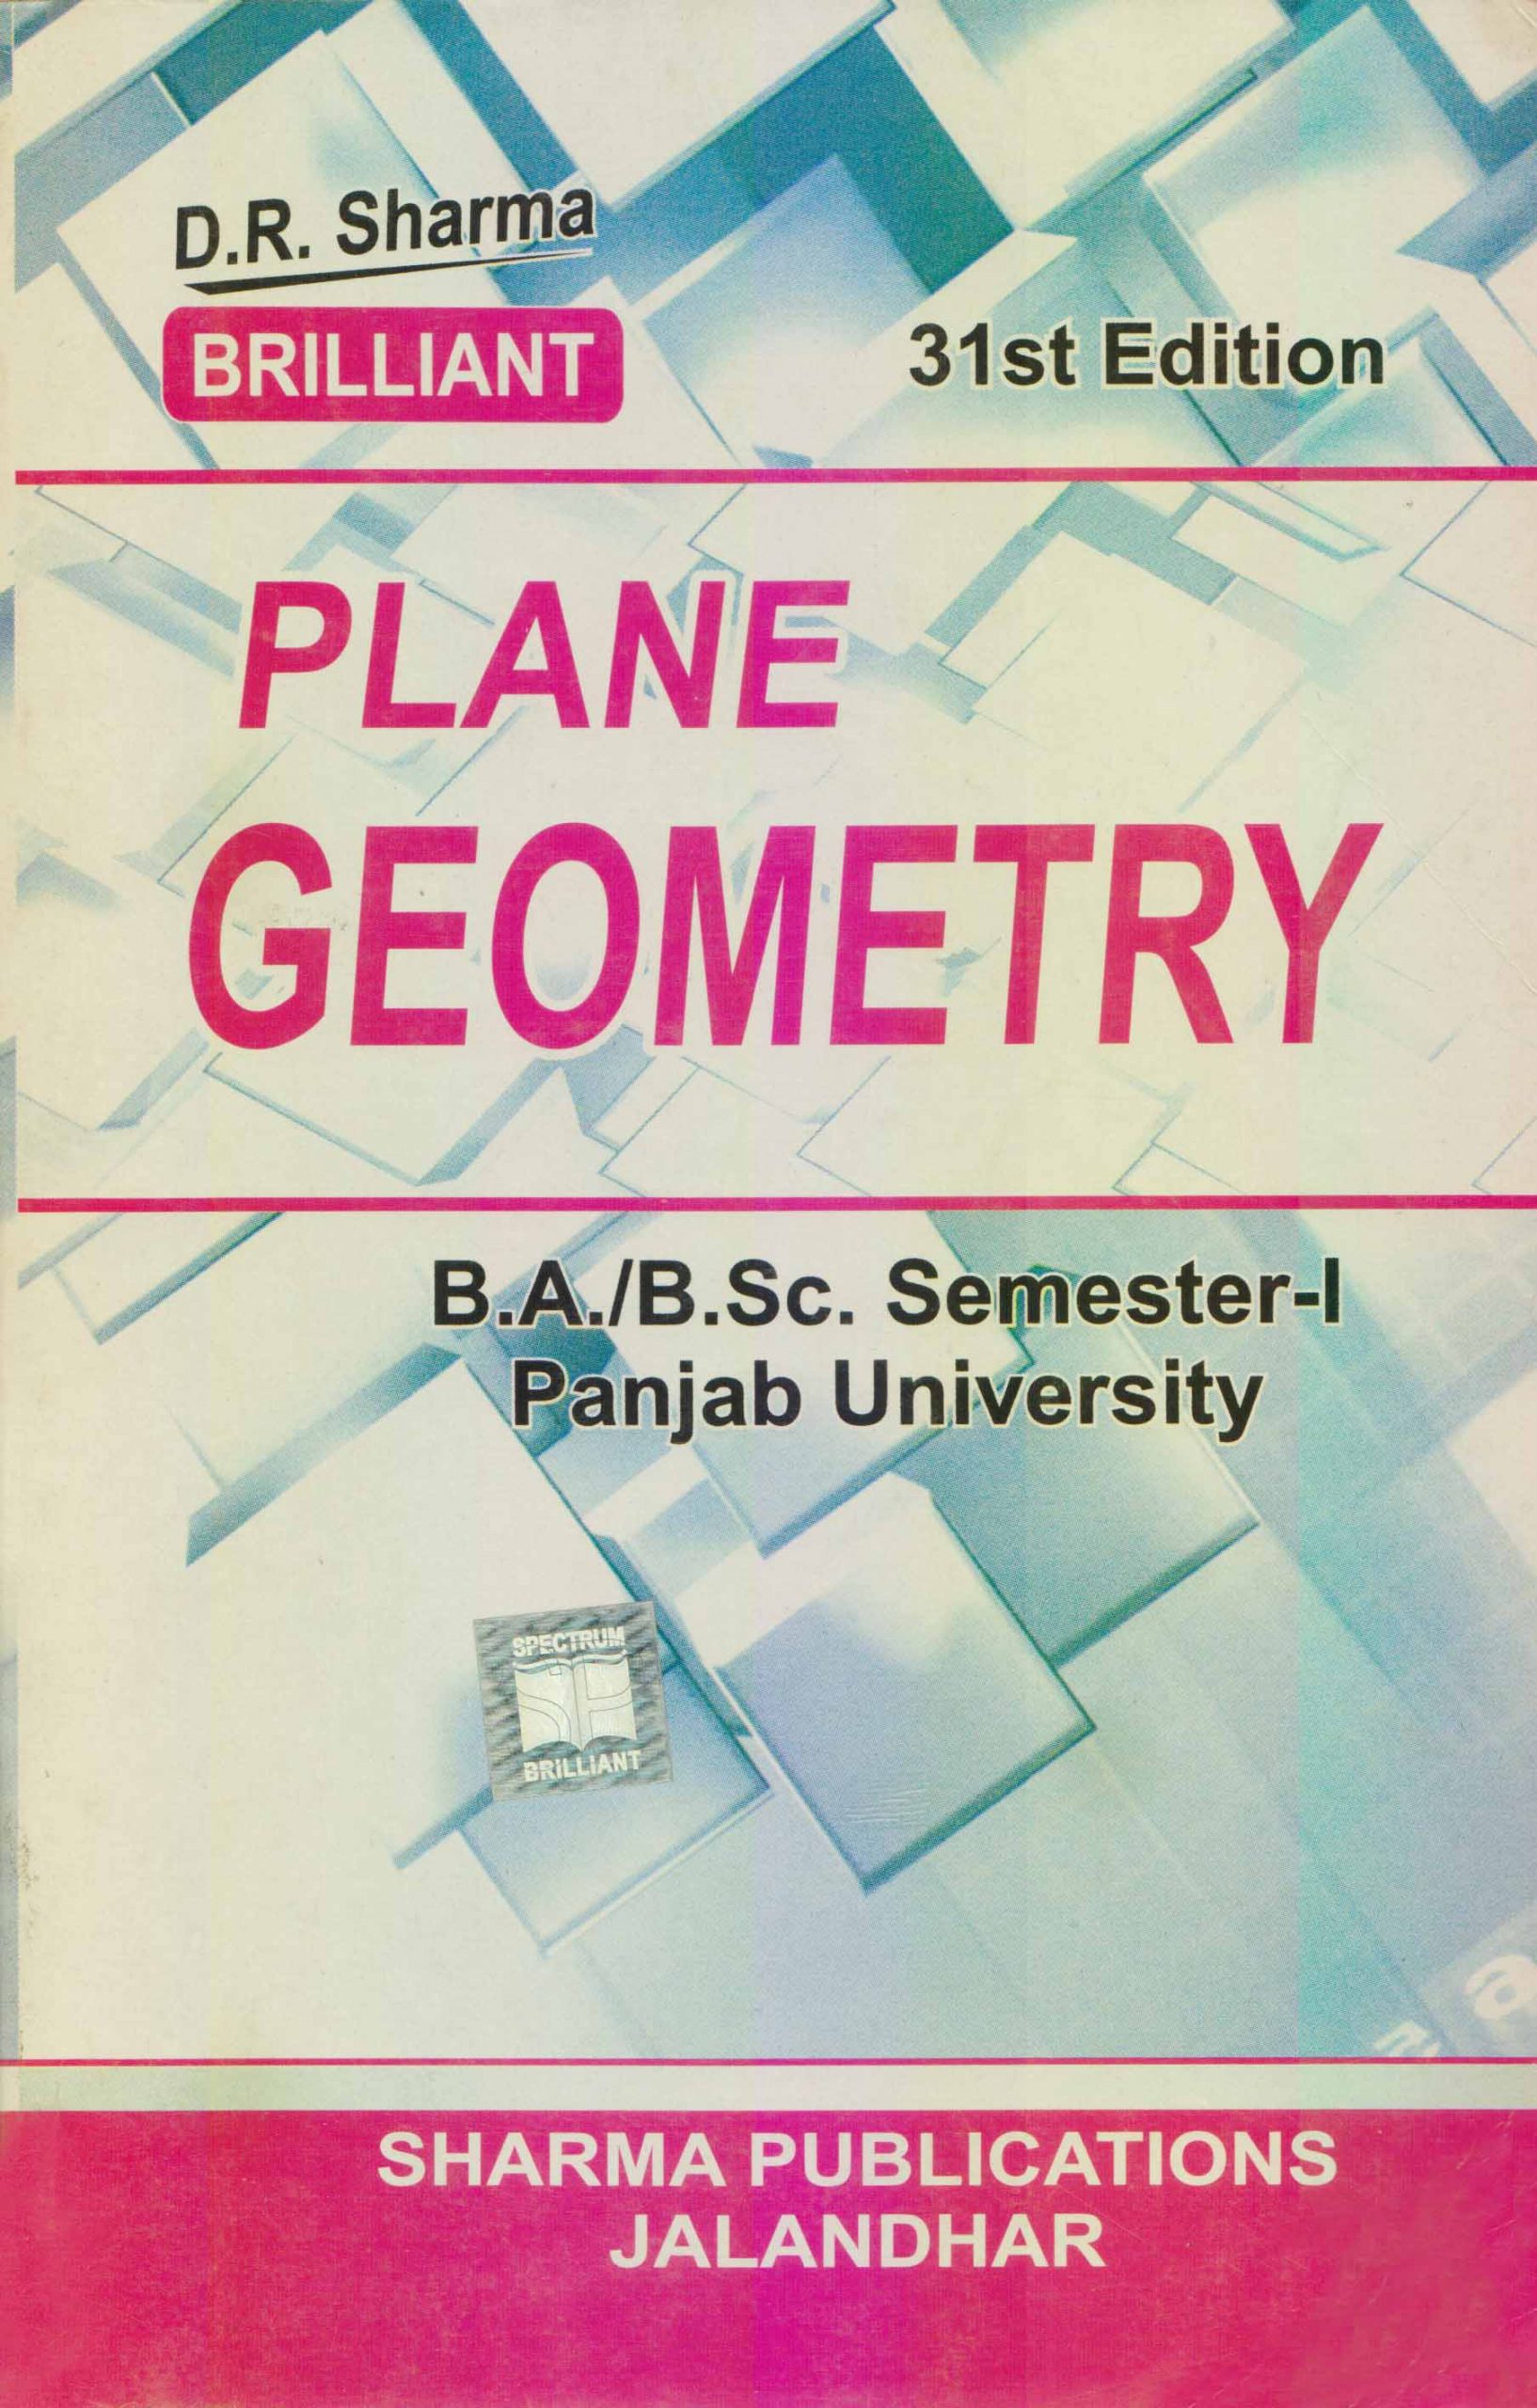 Brilliant Plane Geometry for B.A. / B.Sc., Sem. 1 (P.U.) by D.R. Sharma